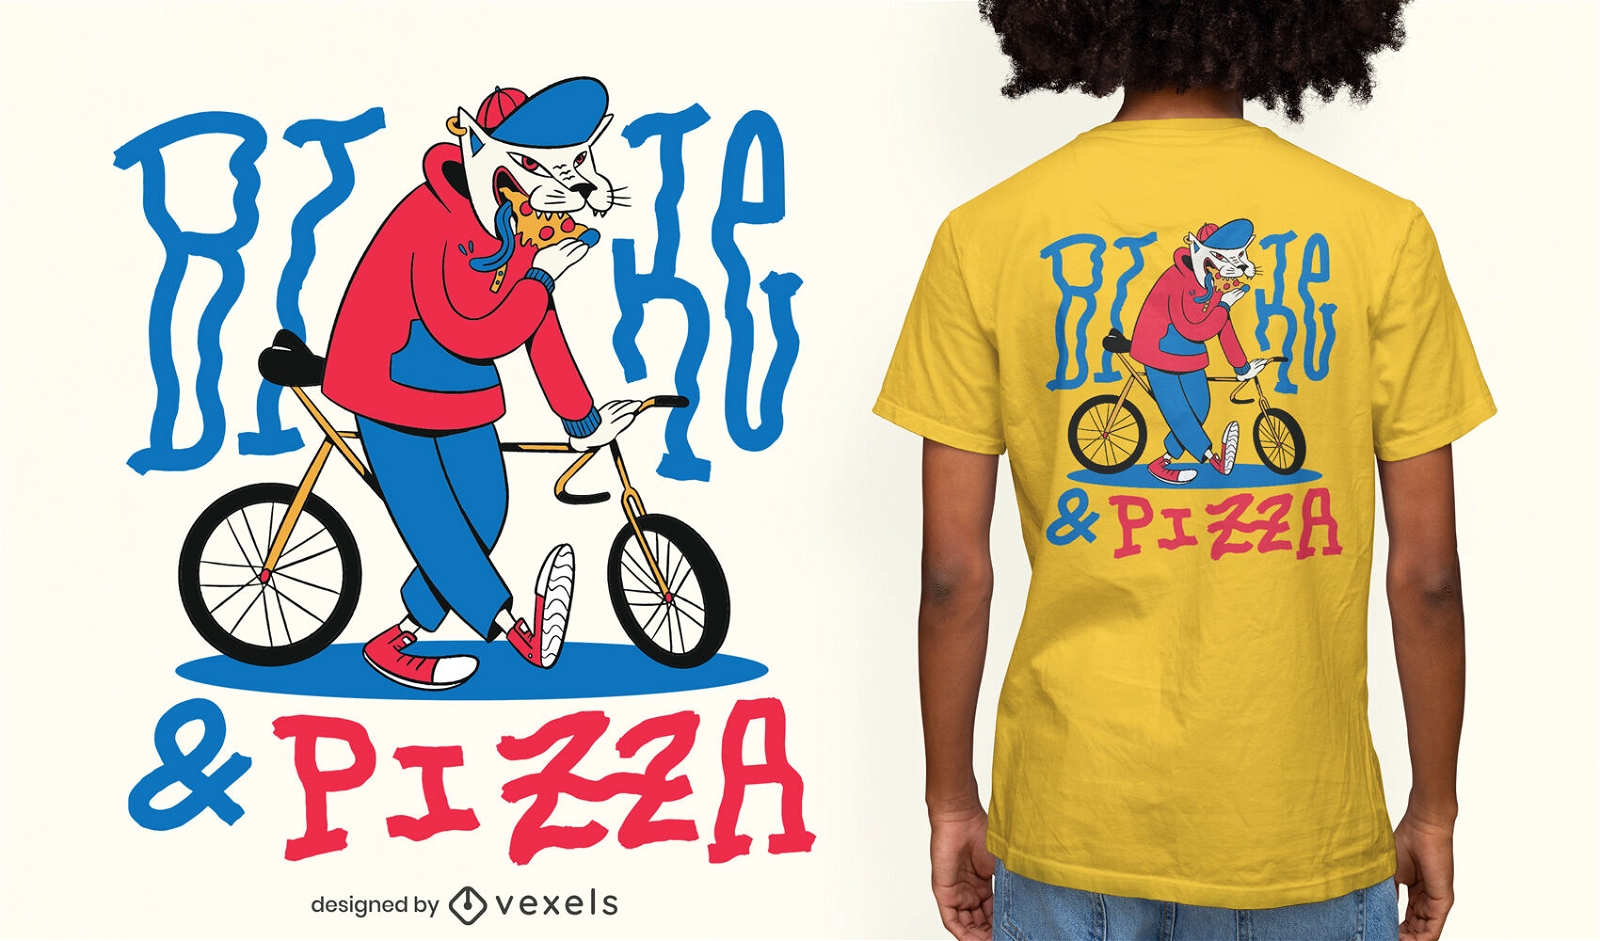 Fixie bike cat t-shirt design